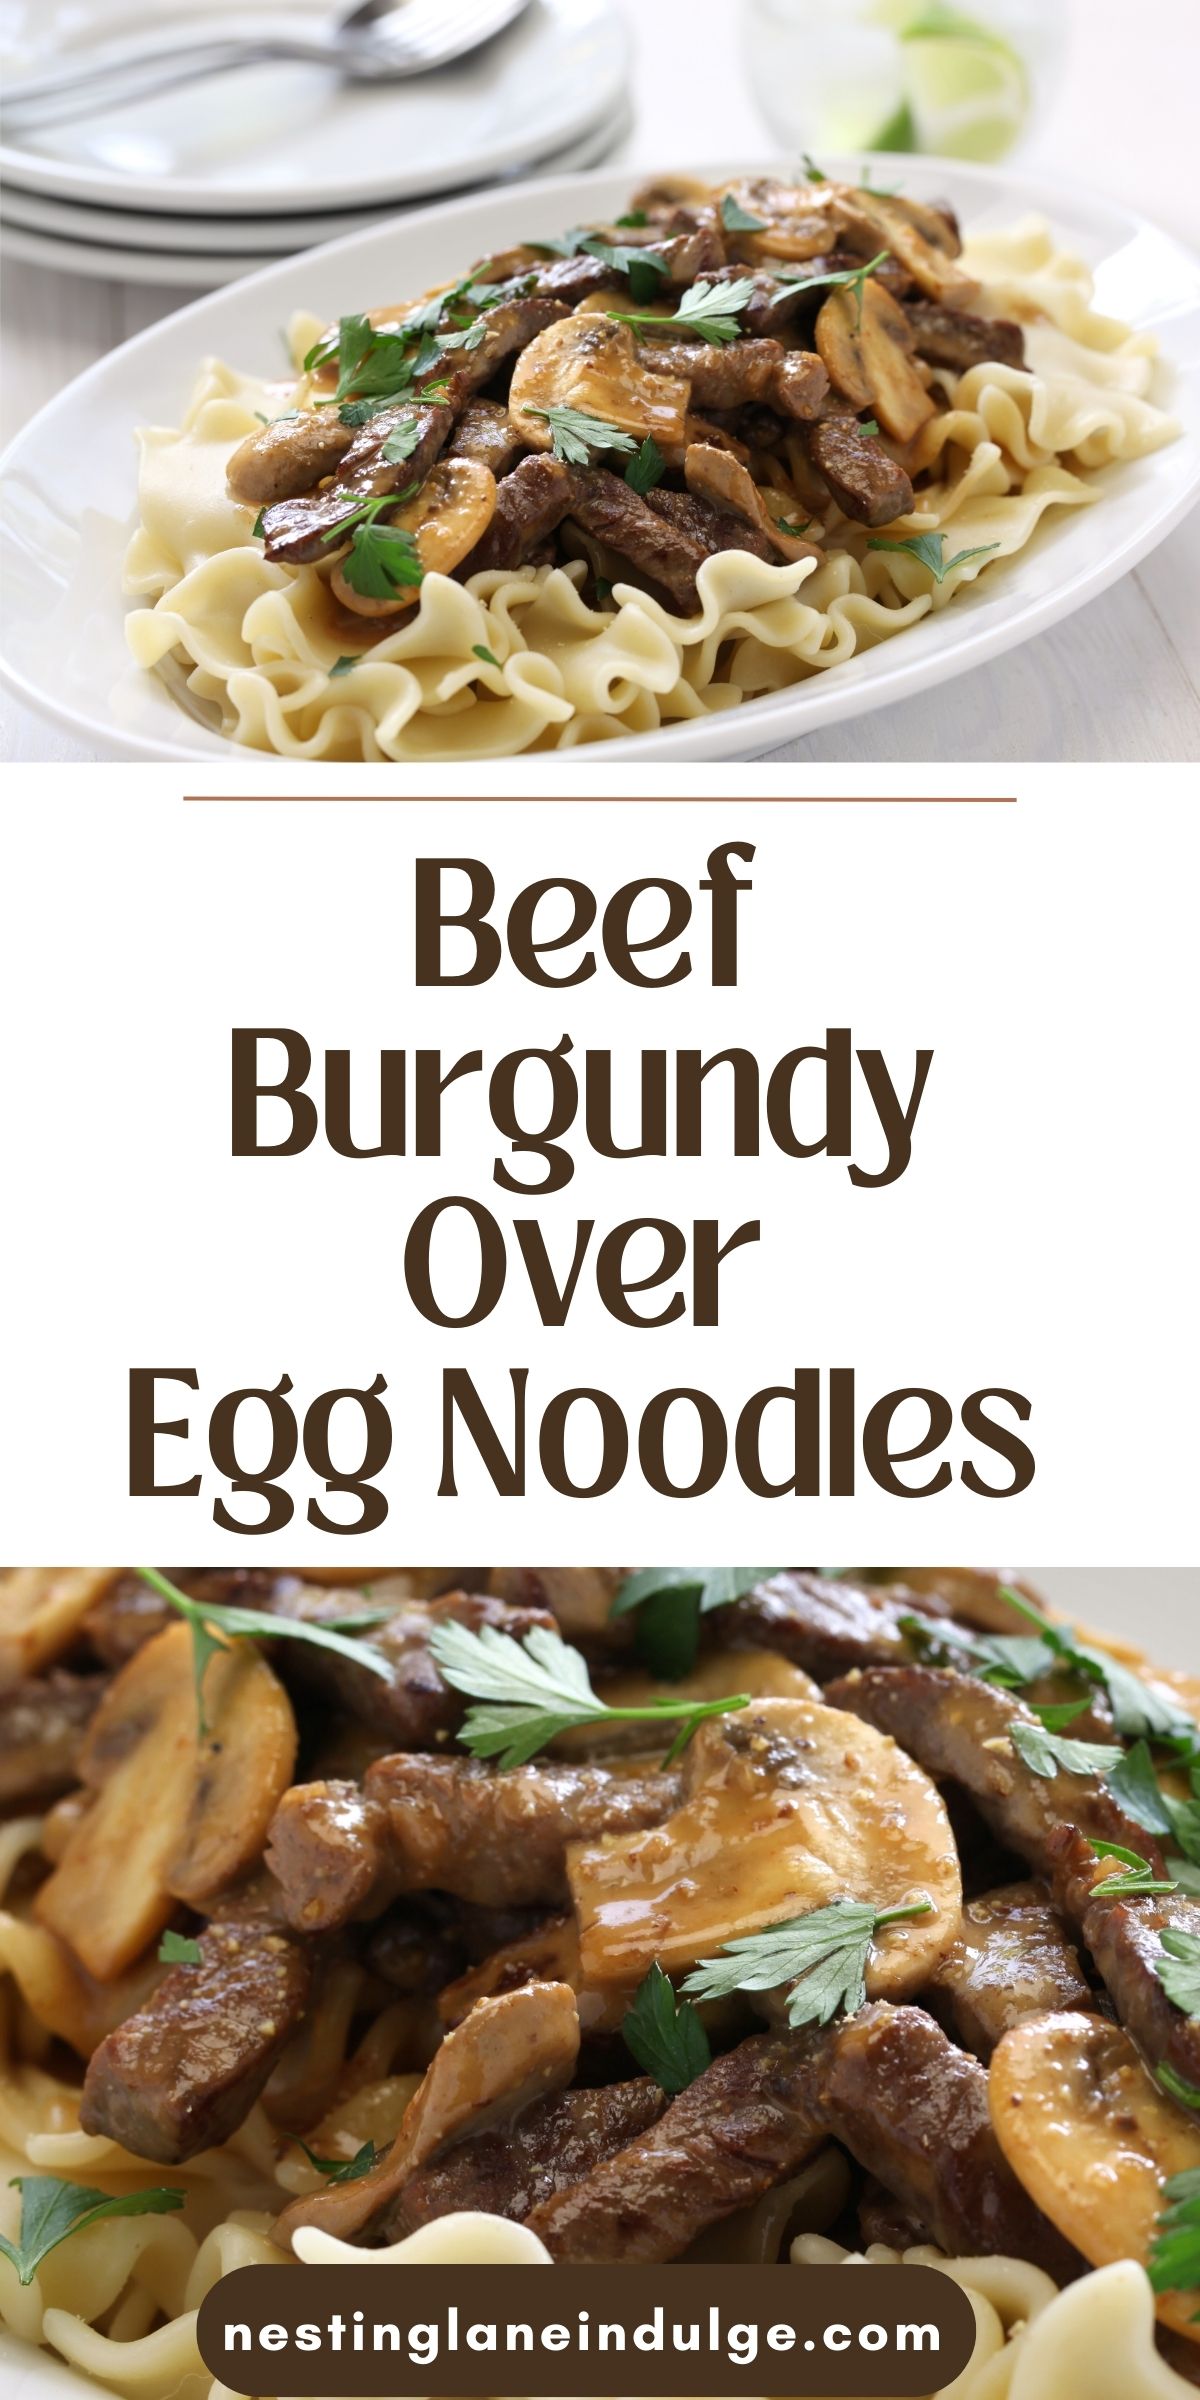 Beef Burgundy Over Egg Noodles Graphic.